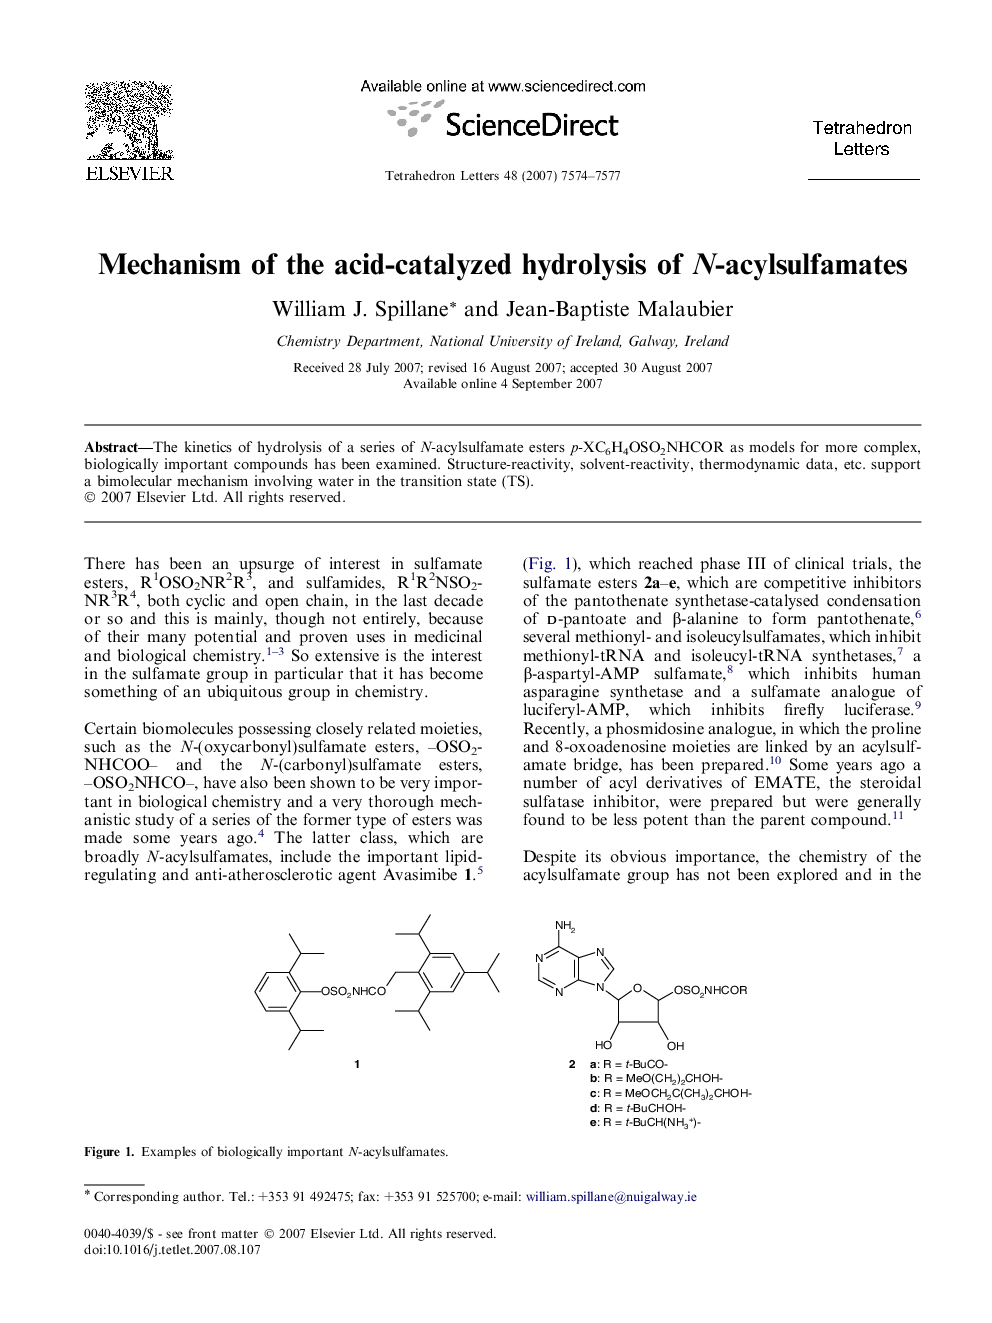 Mechanism of the acid-catalyzed hydrolysis of N-acylsulfamates